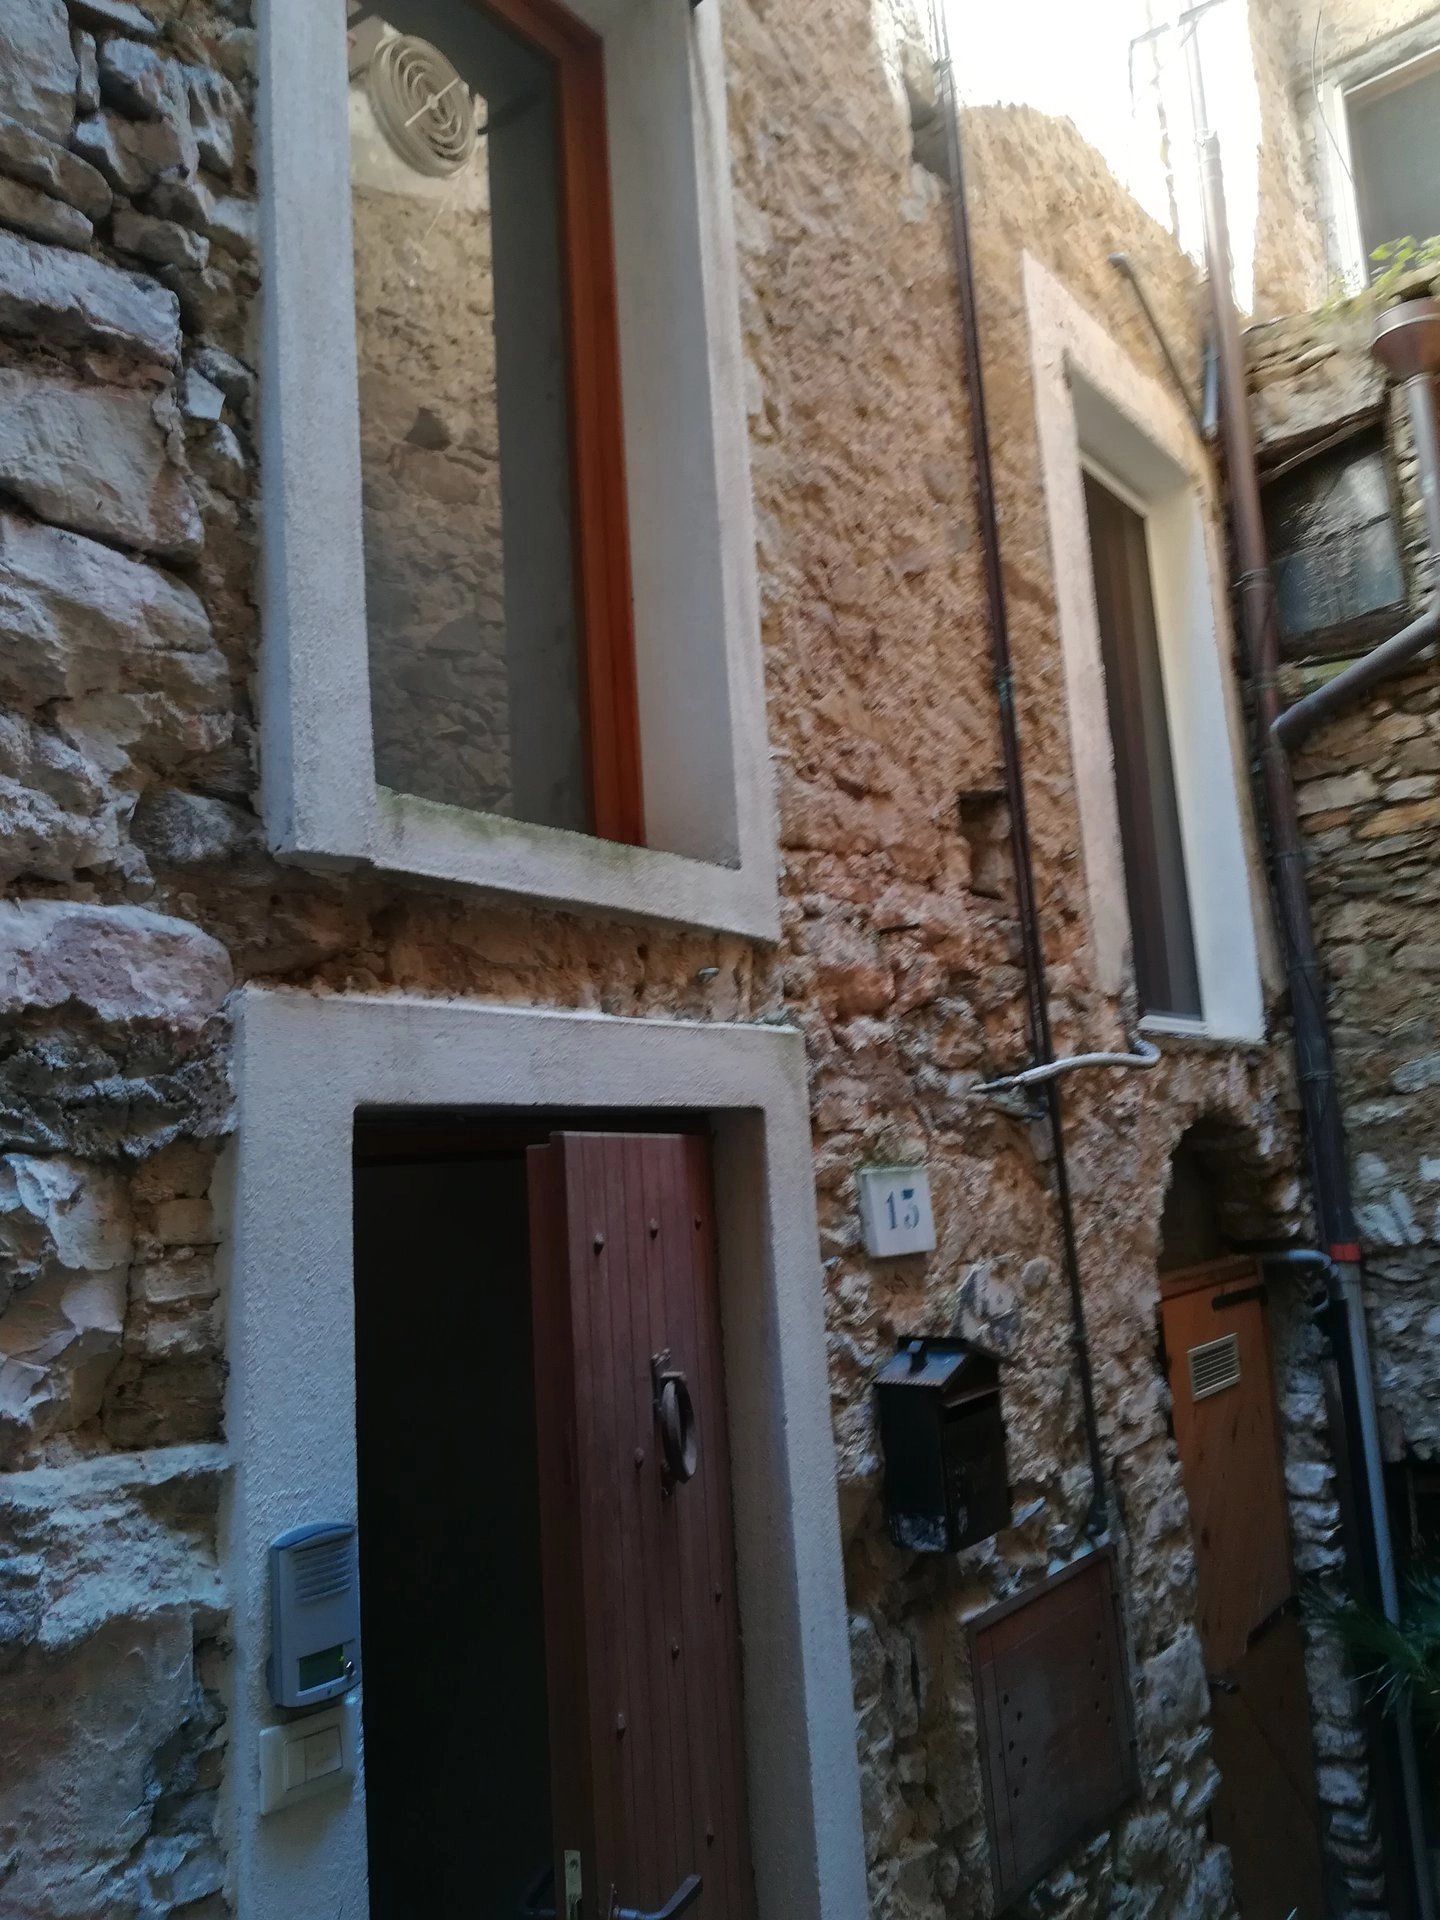 Sale Apartment - Vallebona - Italy